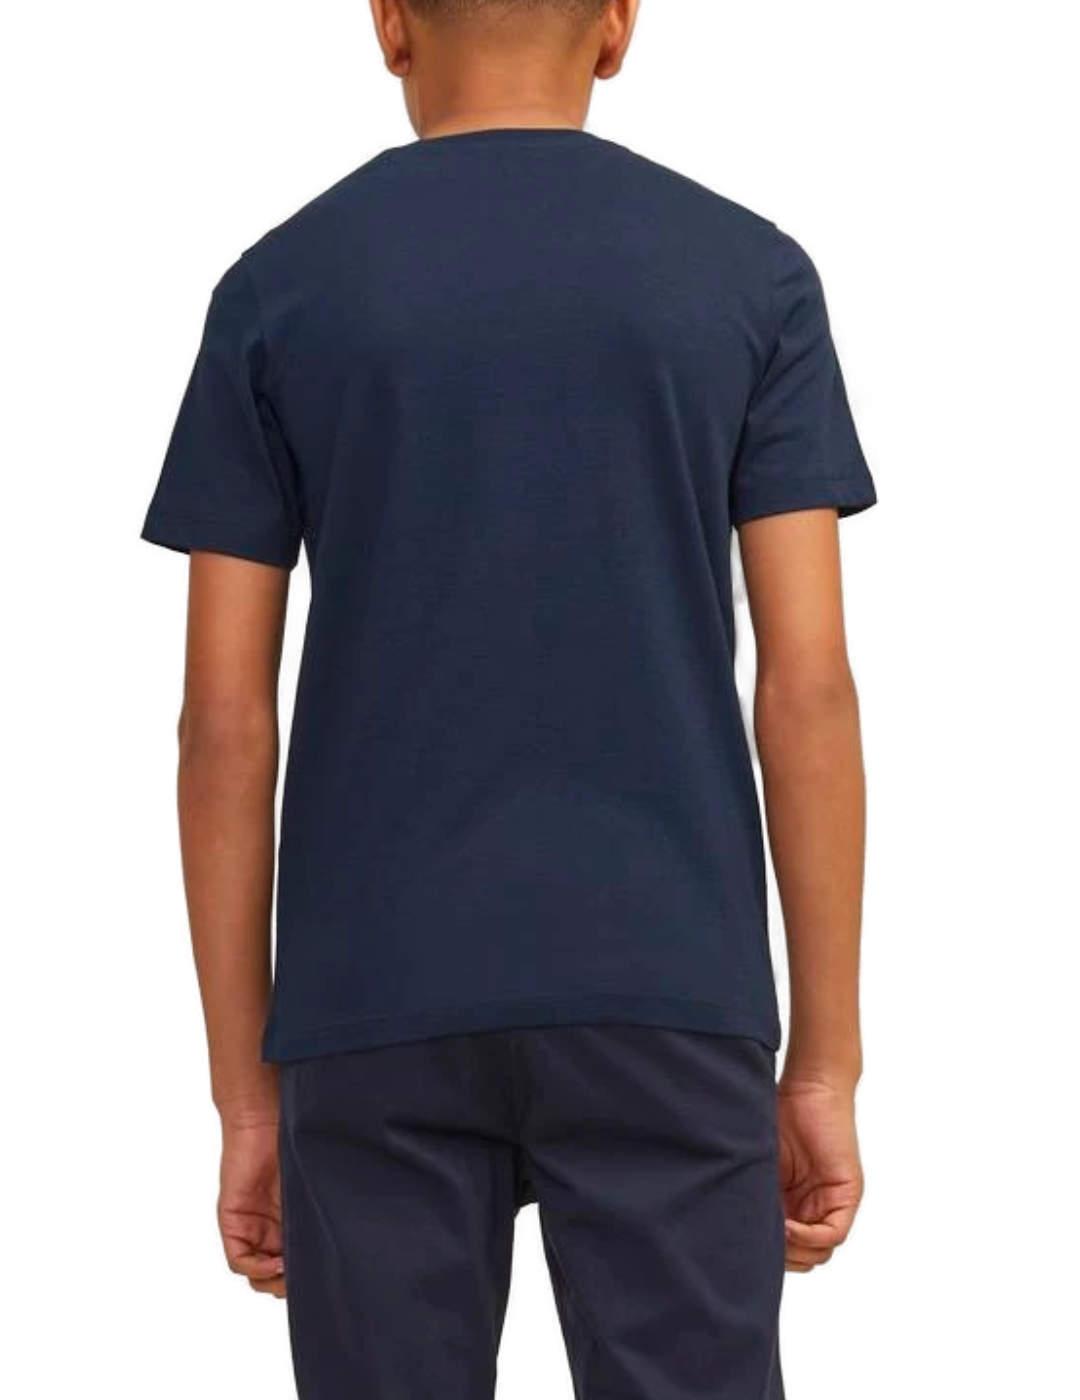 Camiseta Jack&Jones Junior Zipon marino manga corta de niño